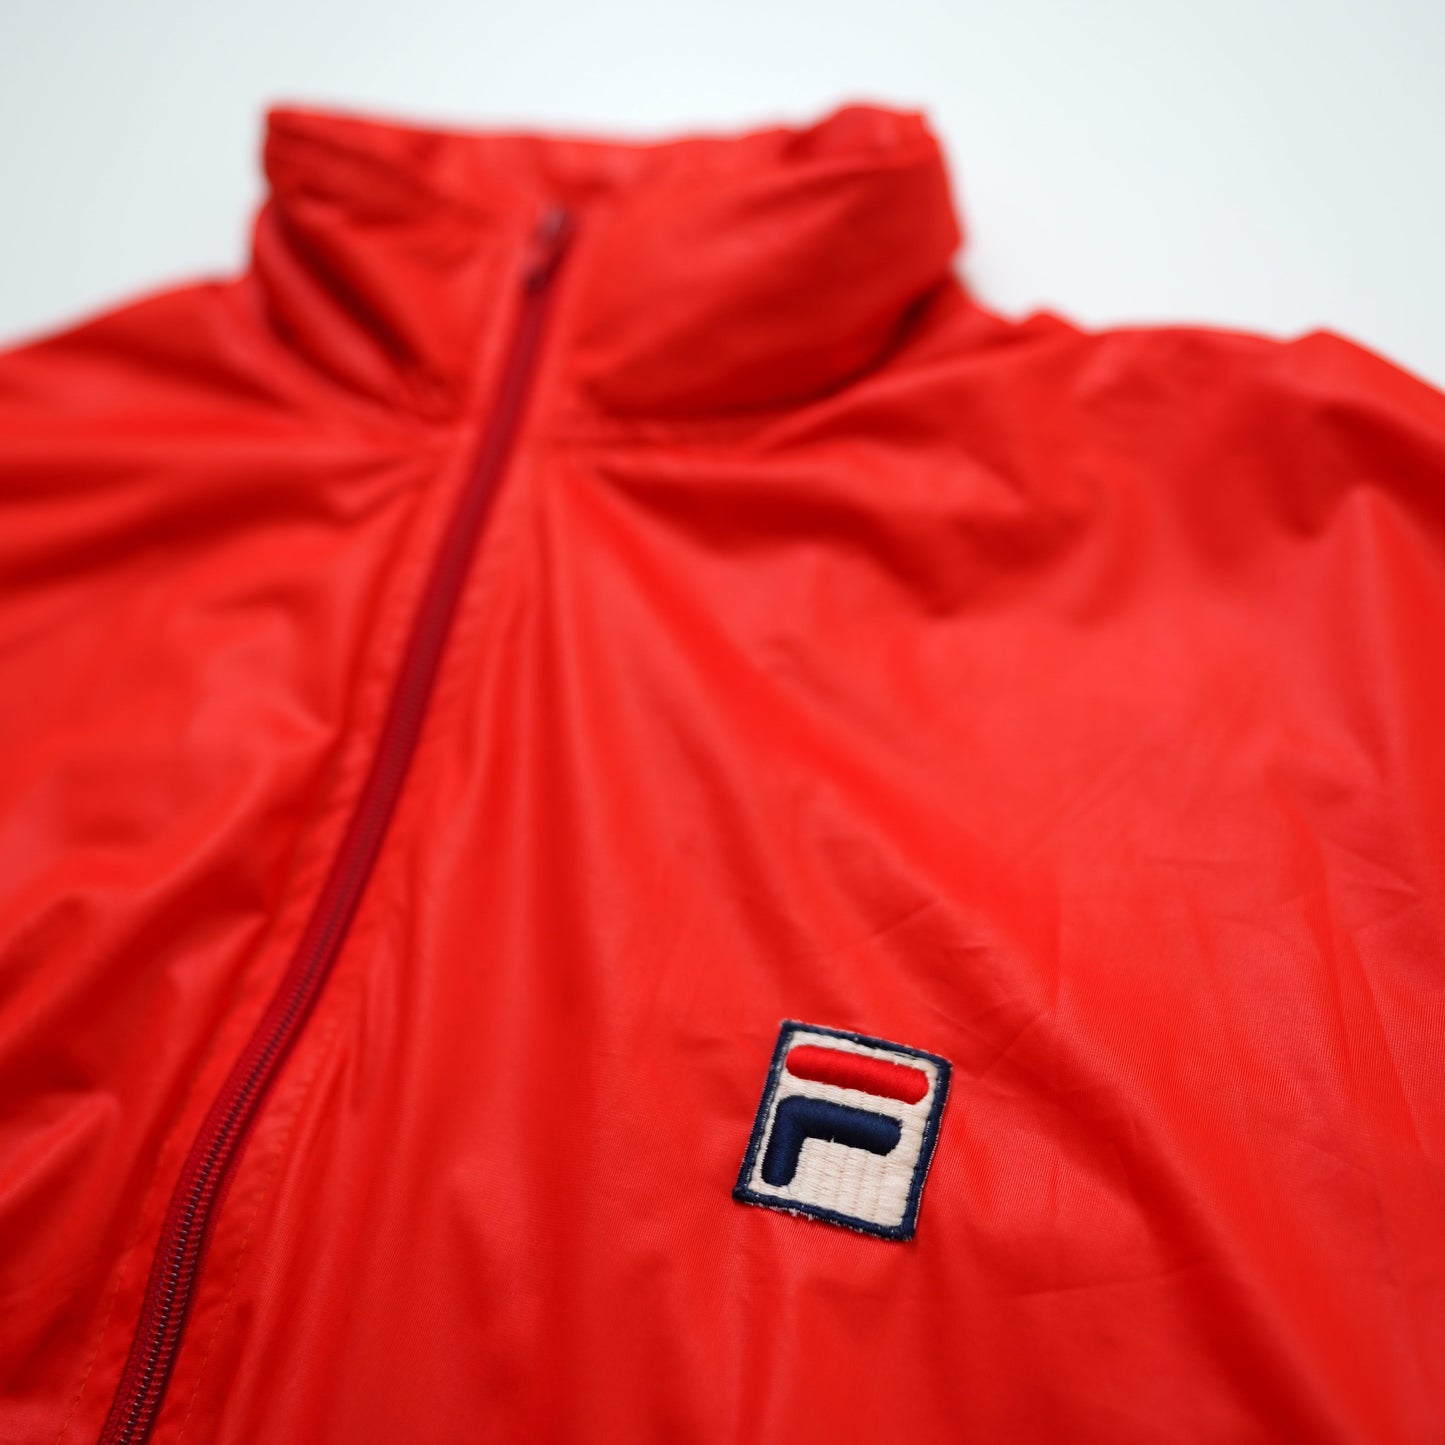 70s-80s FILA track jacket